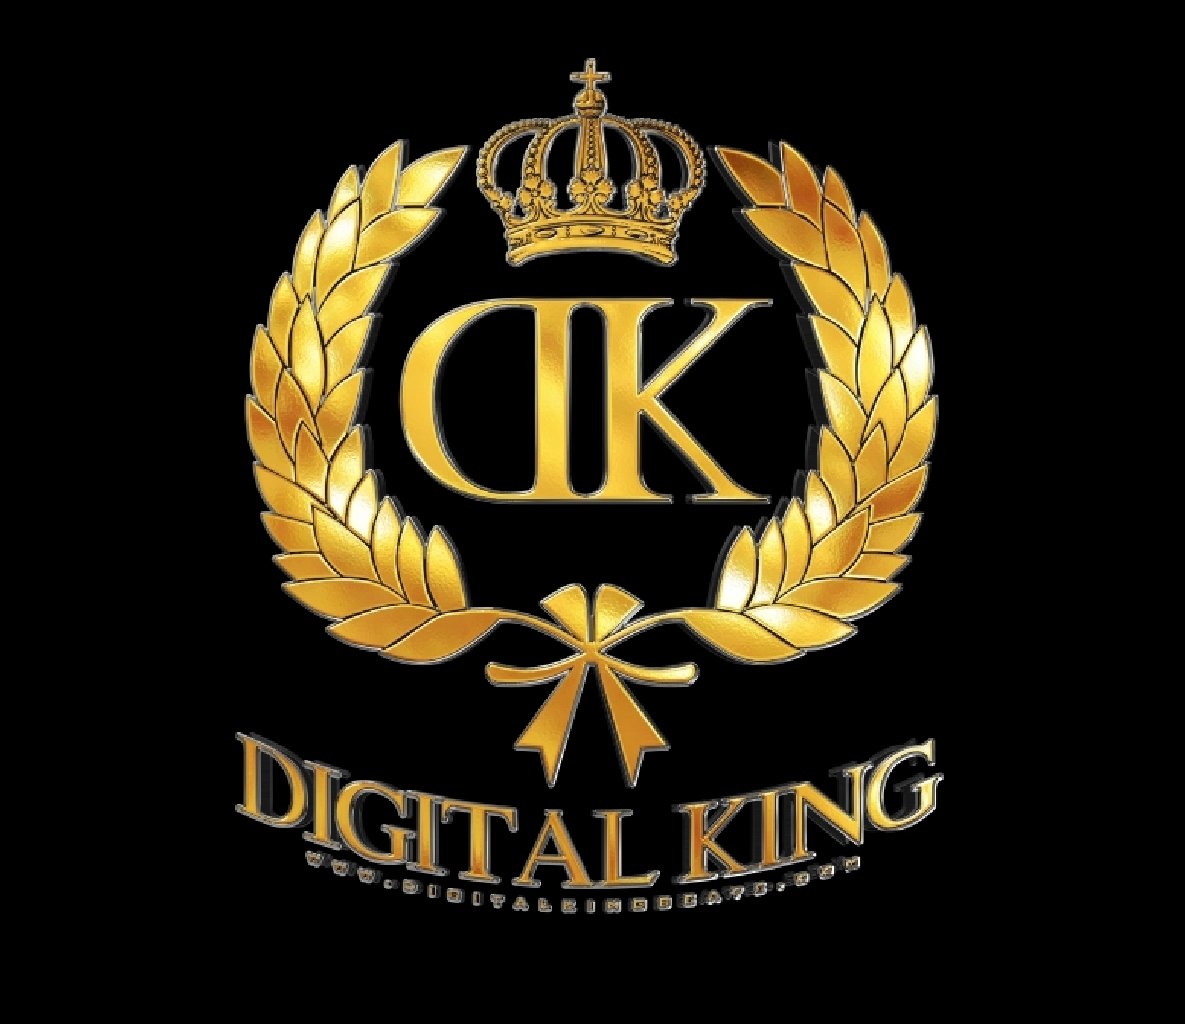 Digital king